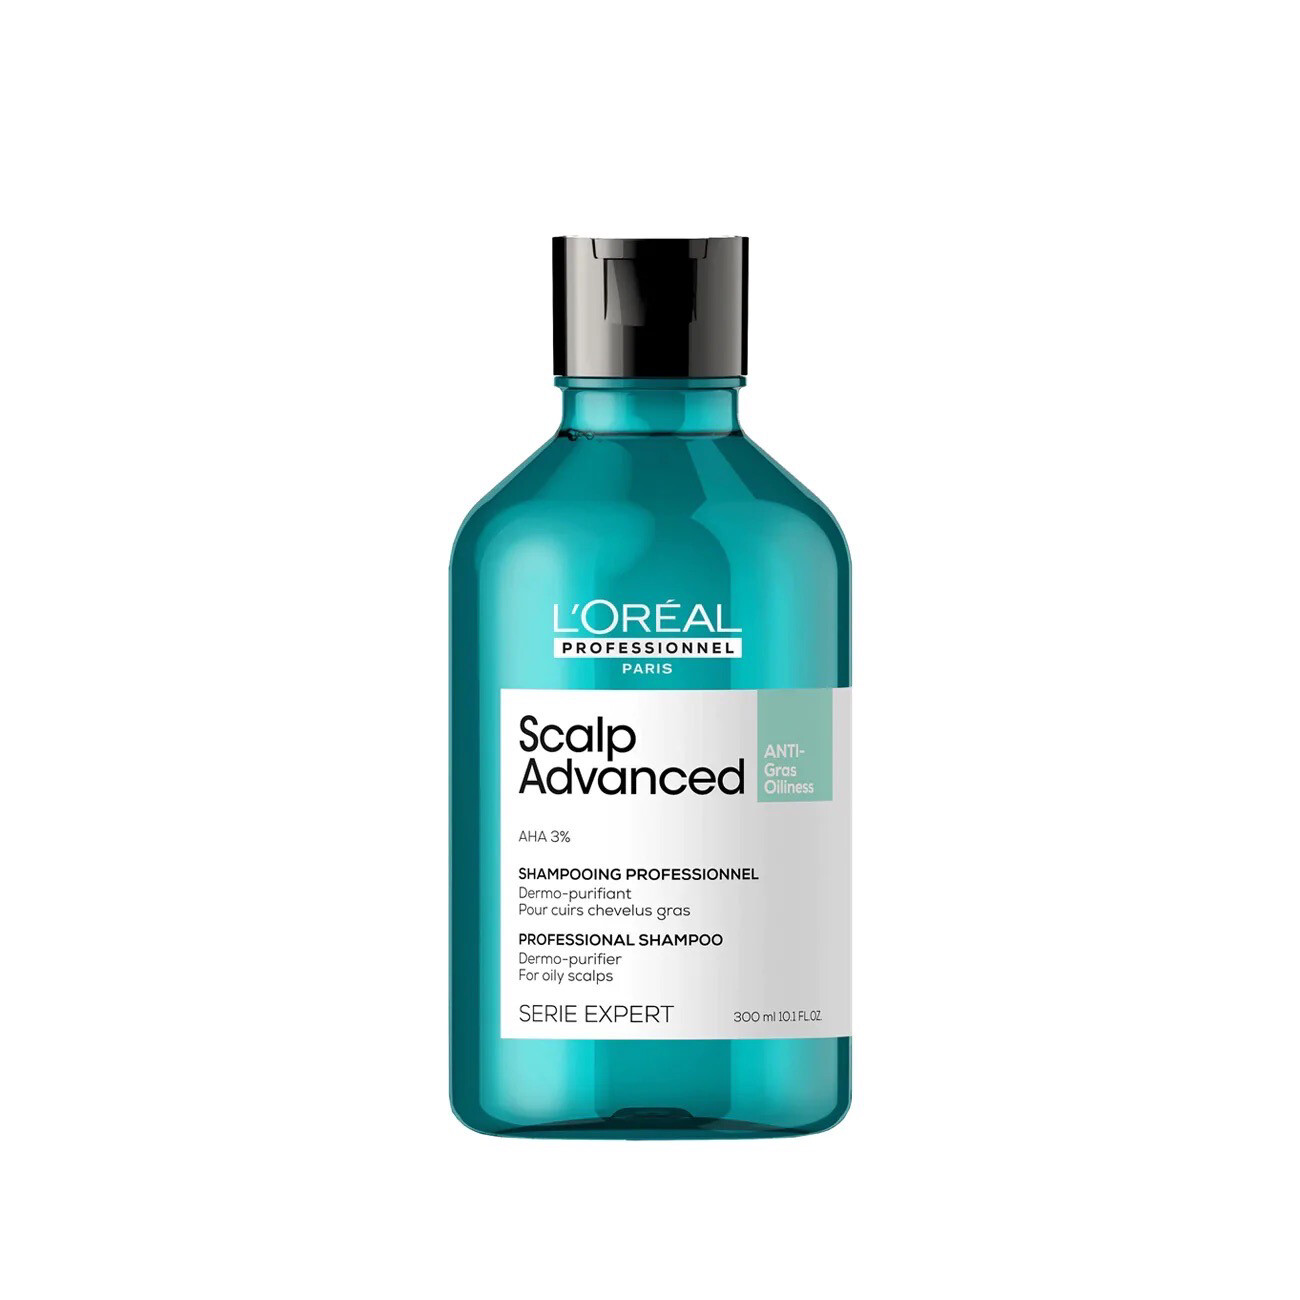 L'ORÉAL PROFESSIONNEL
Serie Expert Scalp Advanced Anti-Oiliness Dermo-Purifier Shampoo